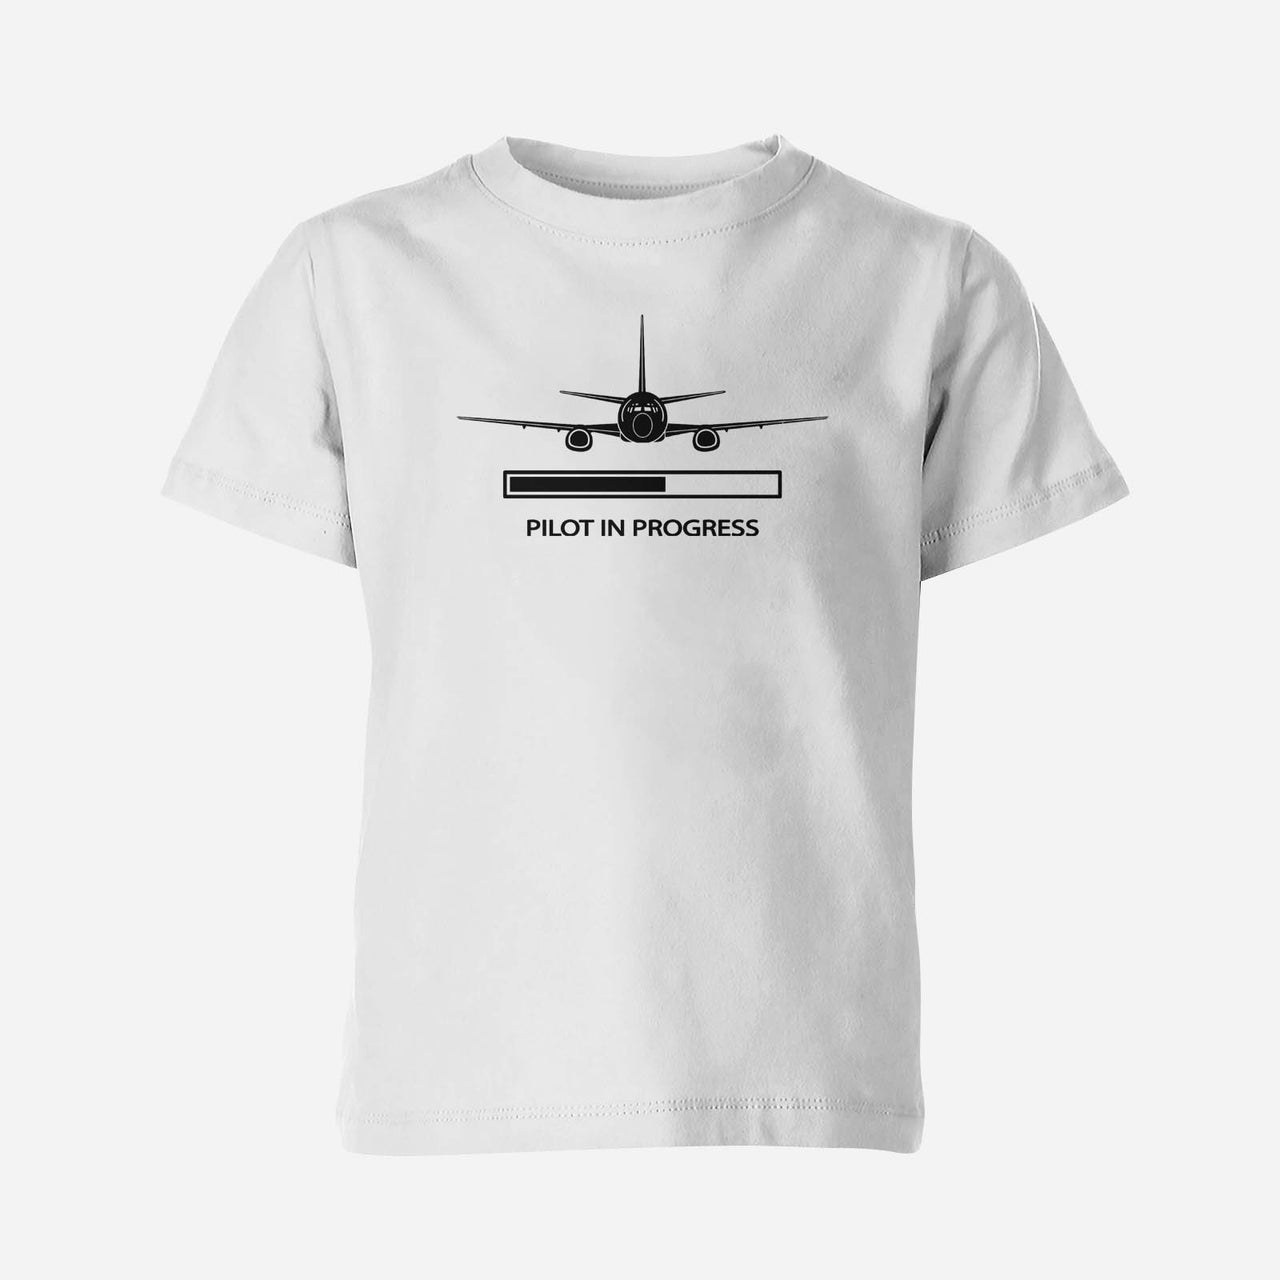 Pilot In Progress Designed Children T-Shirts